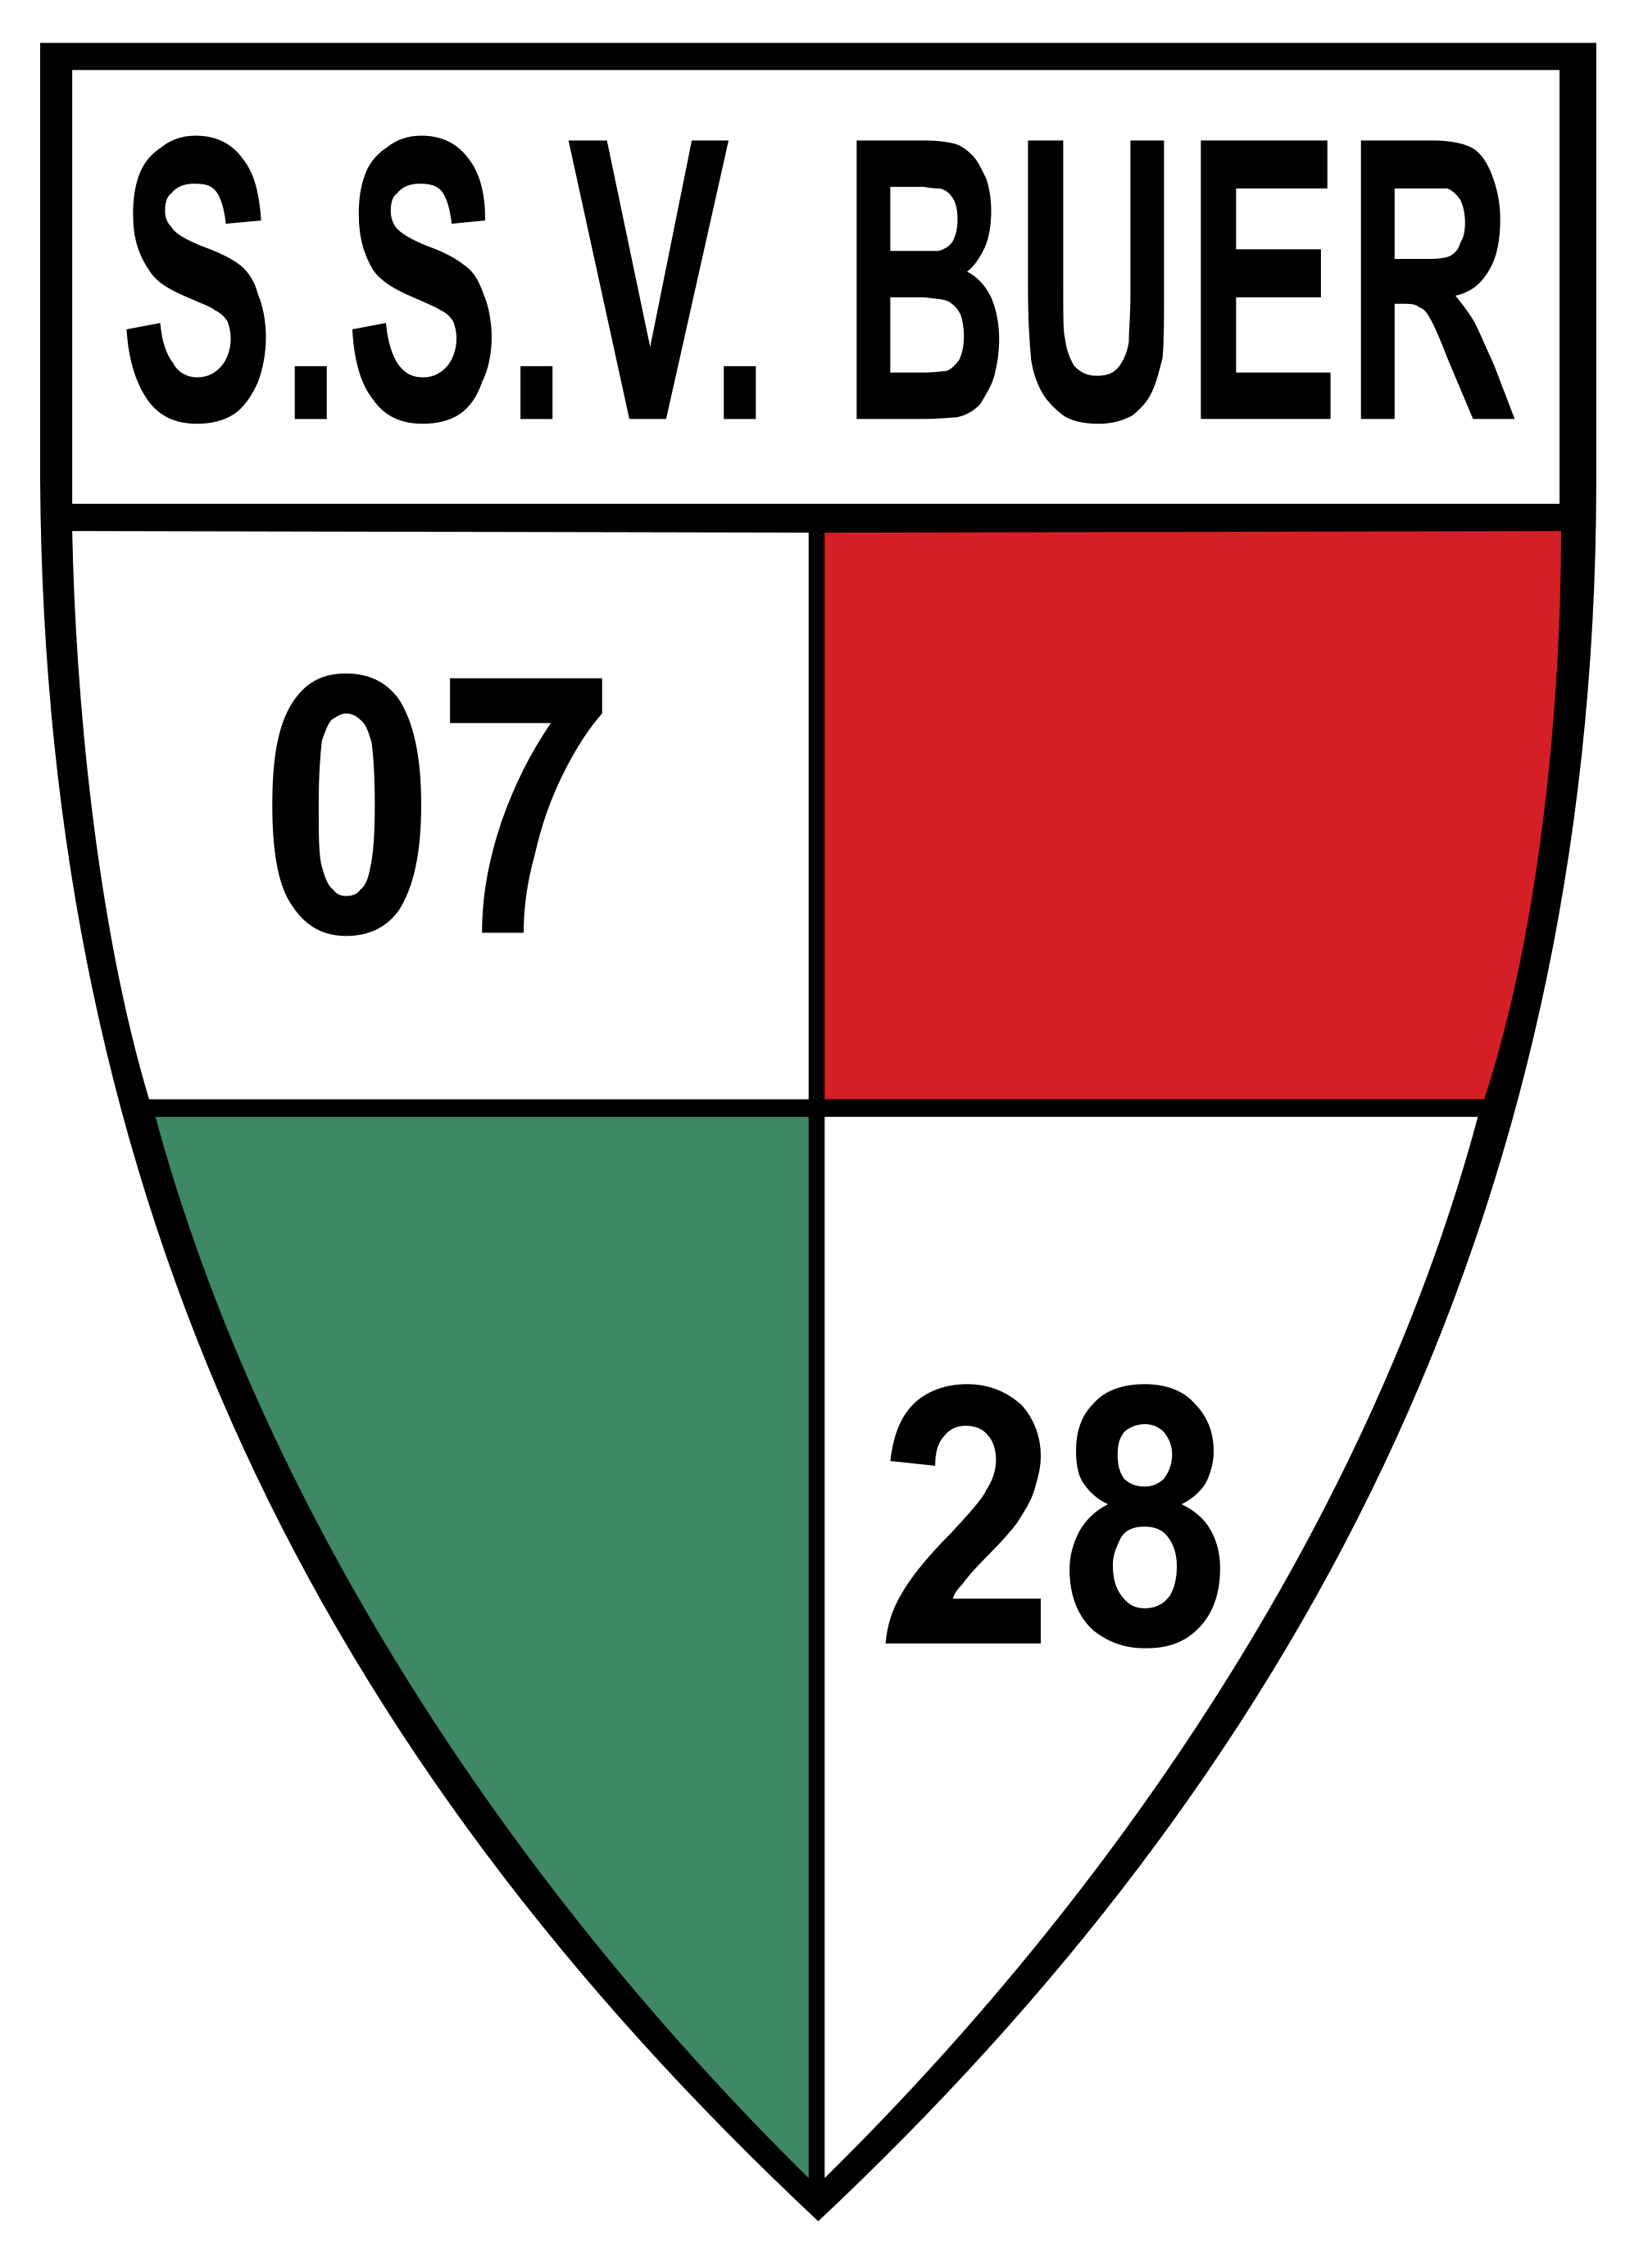 Wappen ehemals SSV Buer 07/28